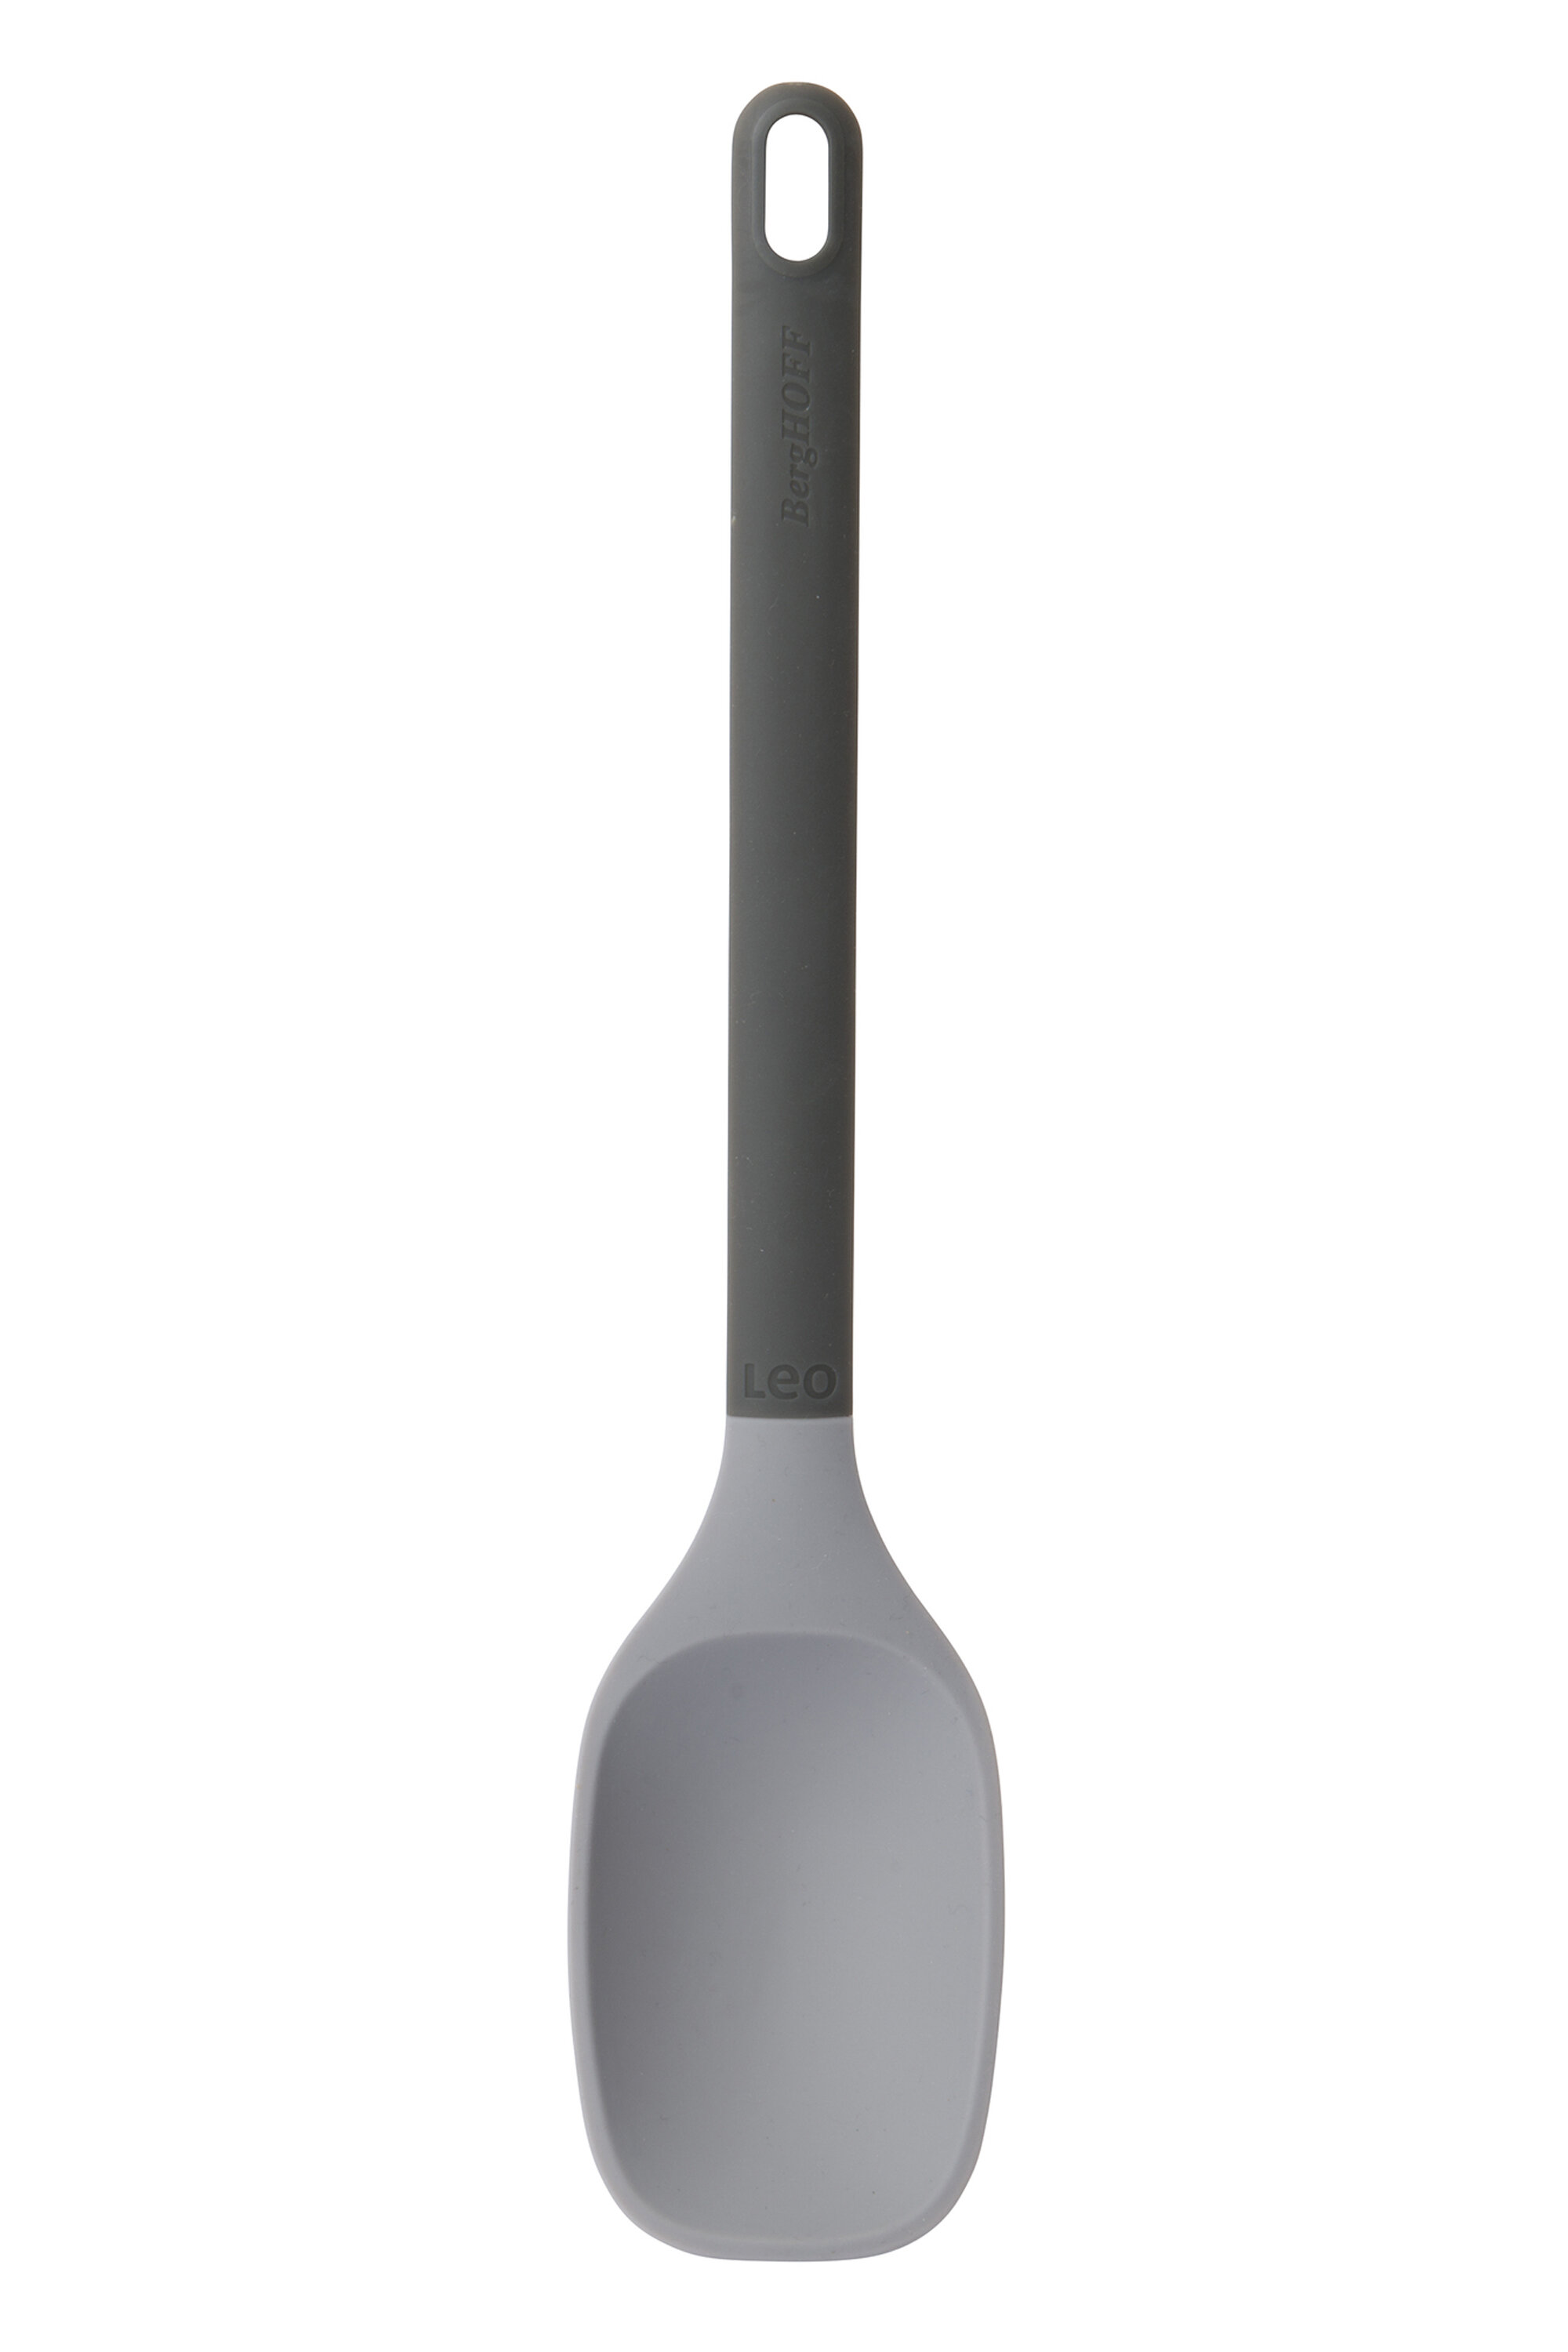 Berghoff Balance Non-stick Nylon Pasta Spoon 12, Recycled